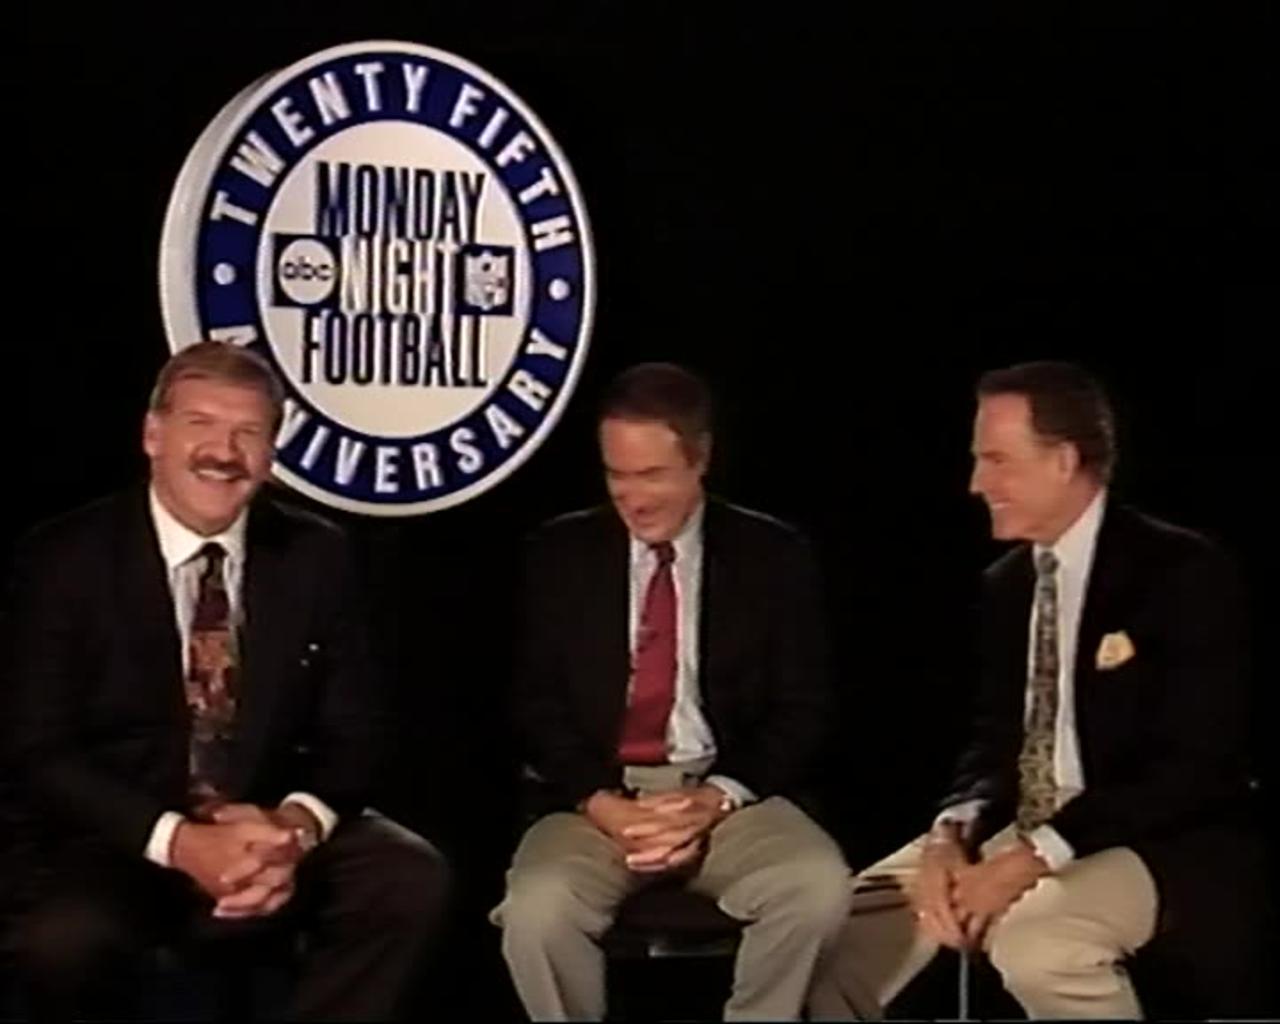 1994 - The Monday Night Football Team Celebrates 25 Years